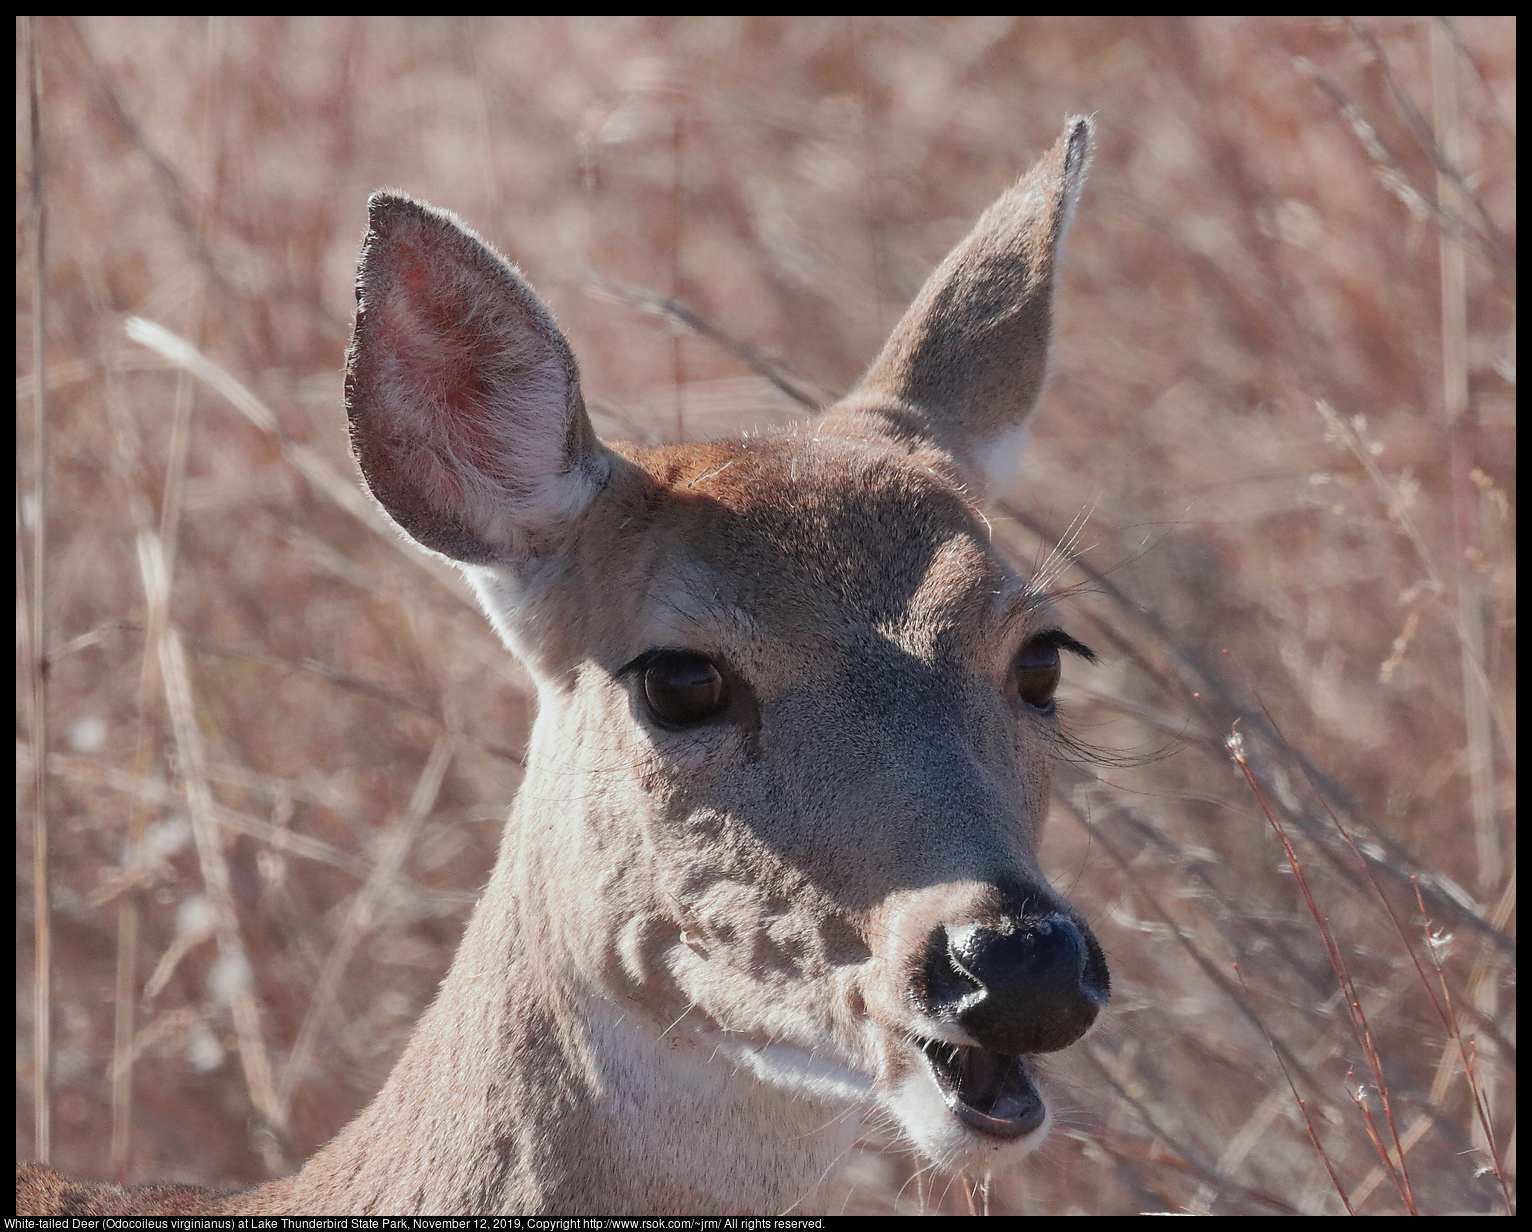 White-tailed Deer (Odocoileus virginianus) at Lake Thunderbird State Park, November 12, 2019